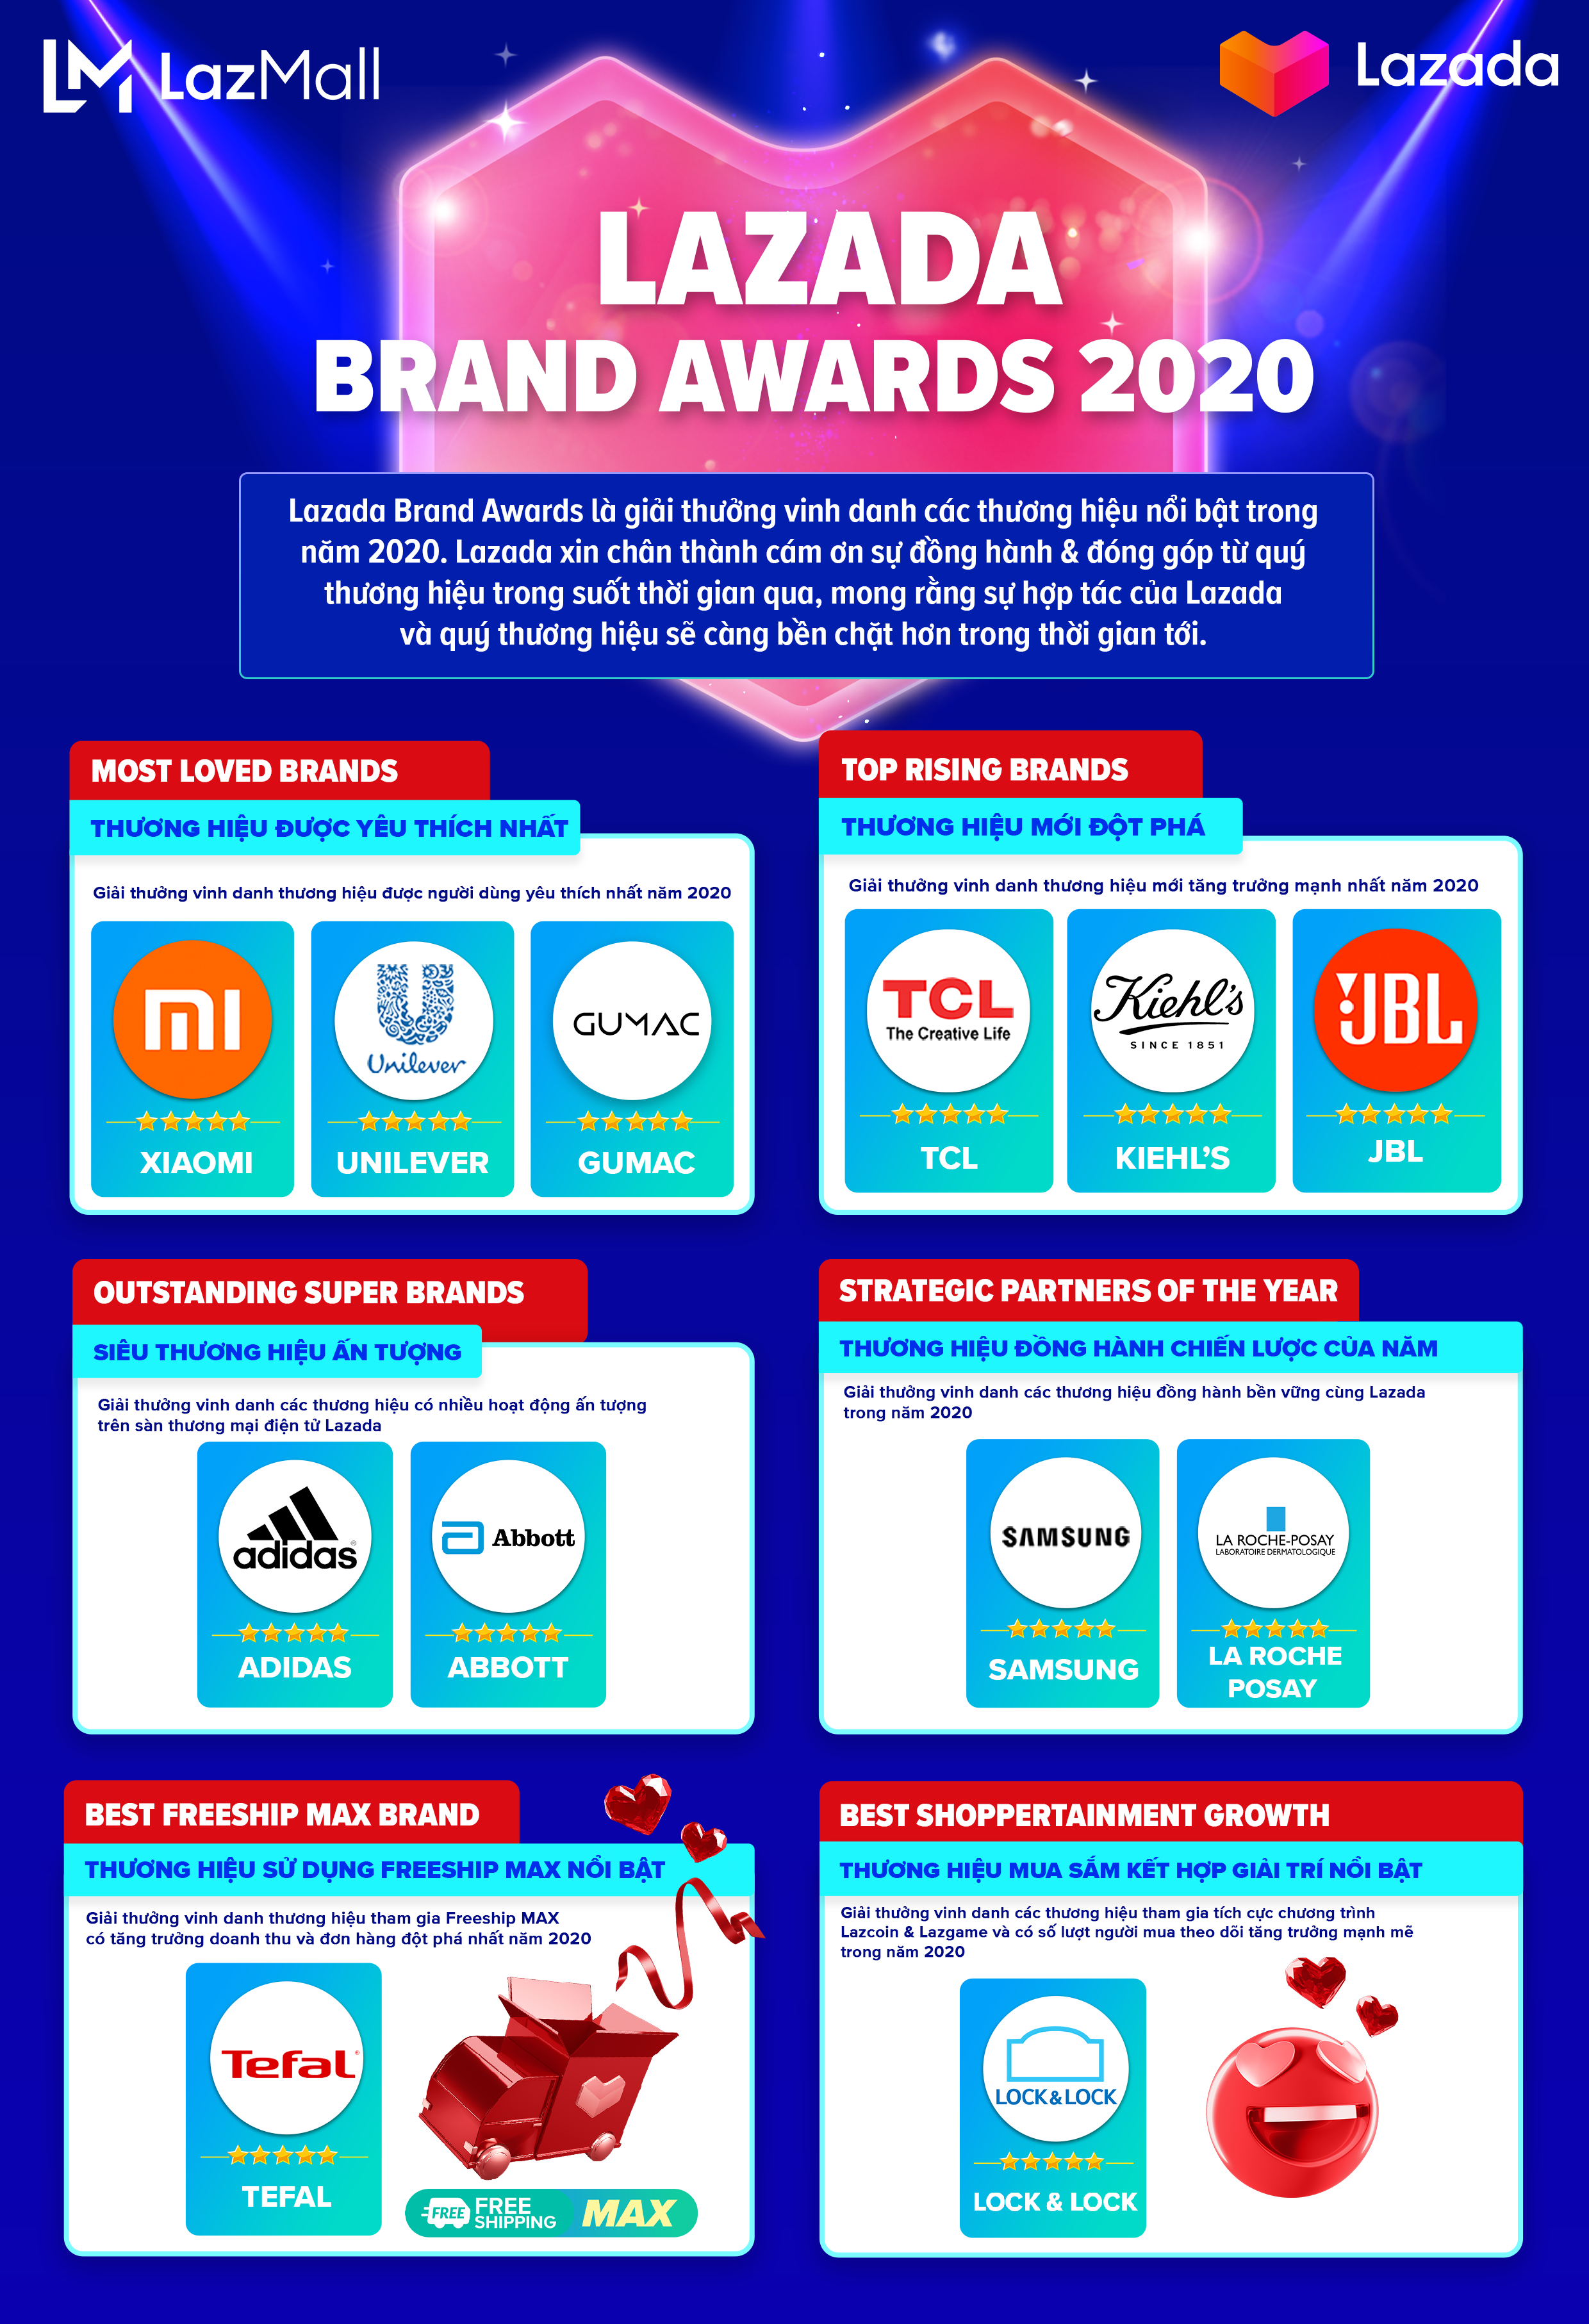 Lazada brand awards 2020